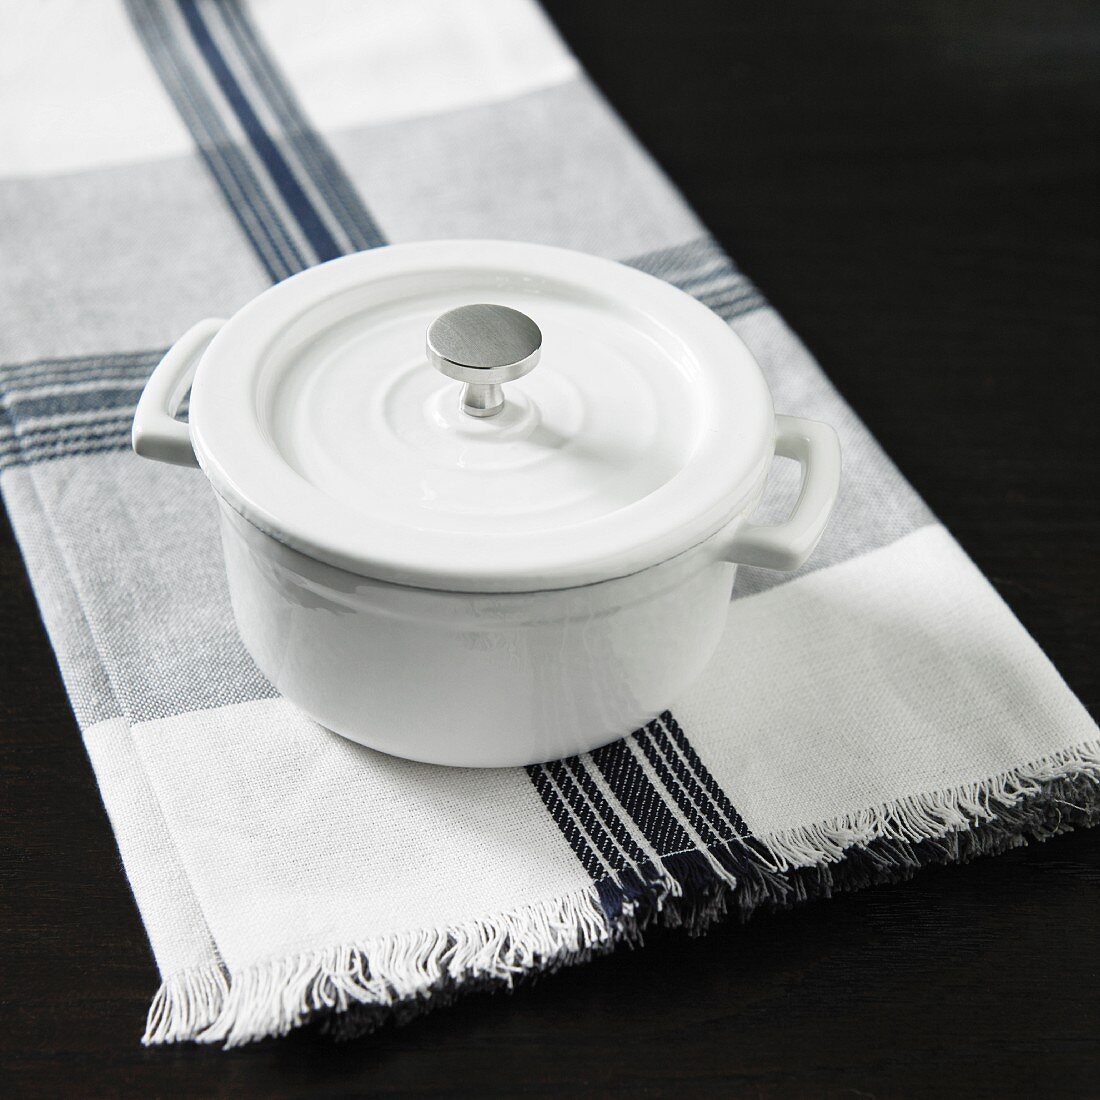 A white pot on a napkin